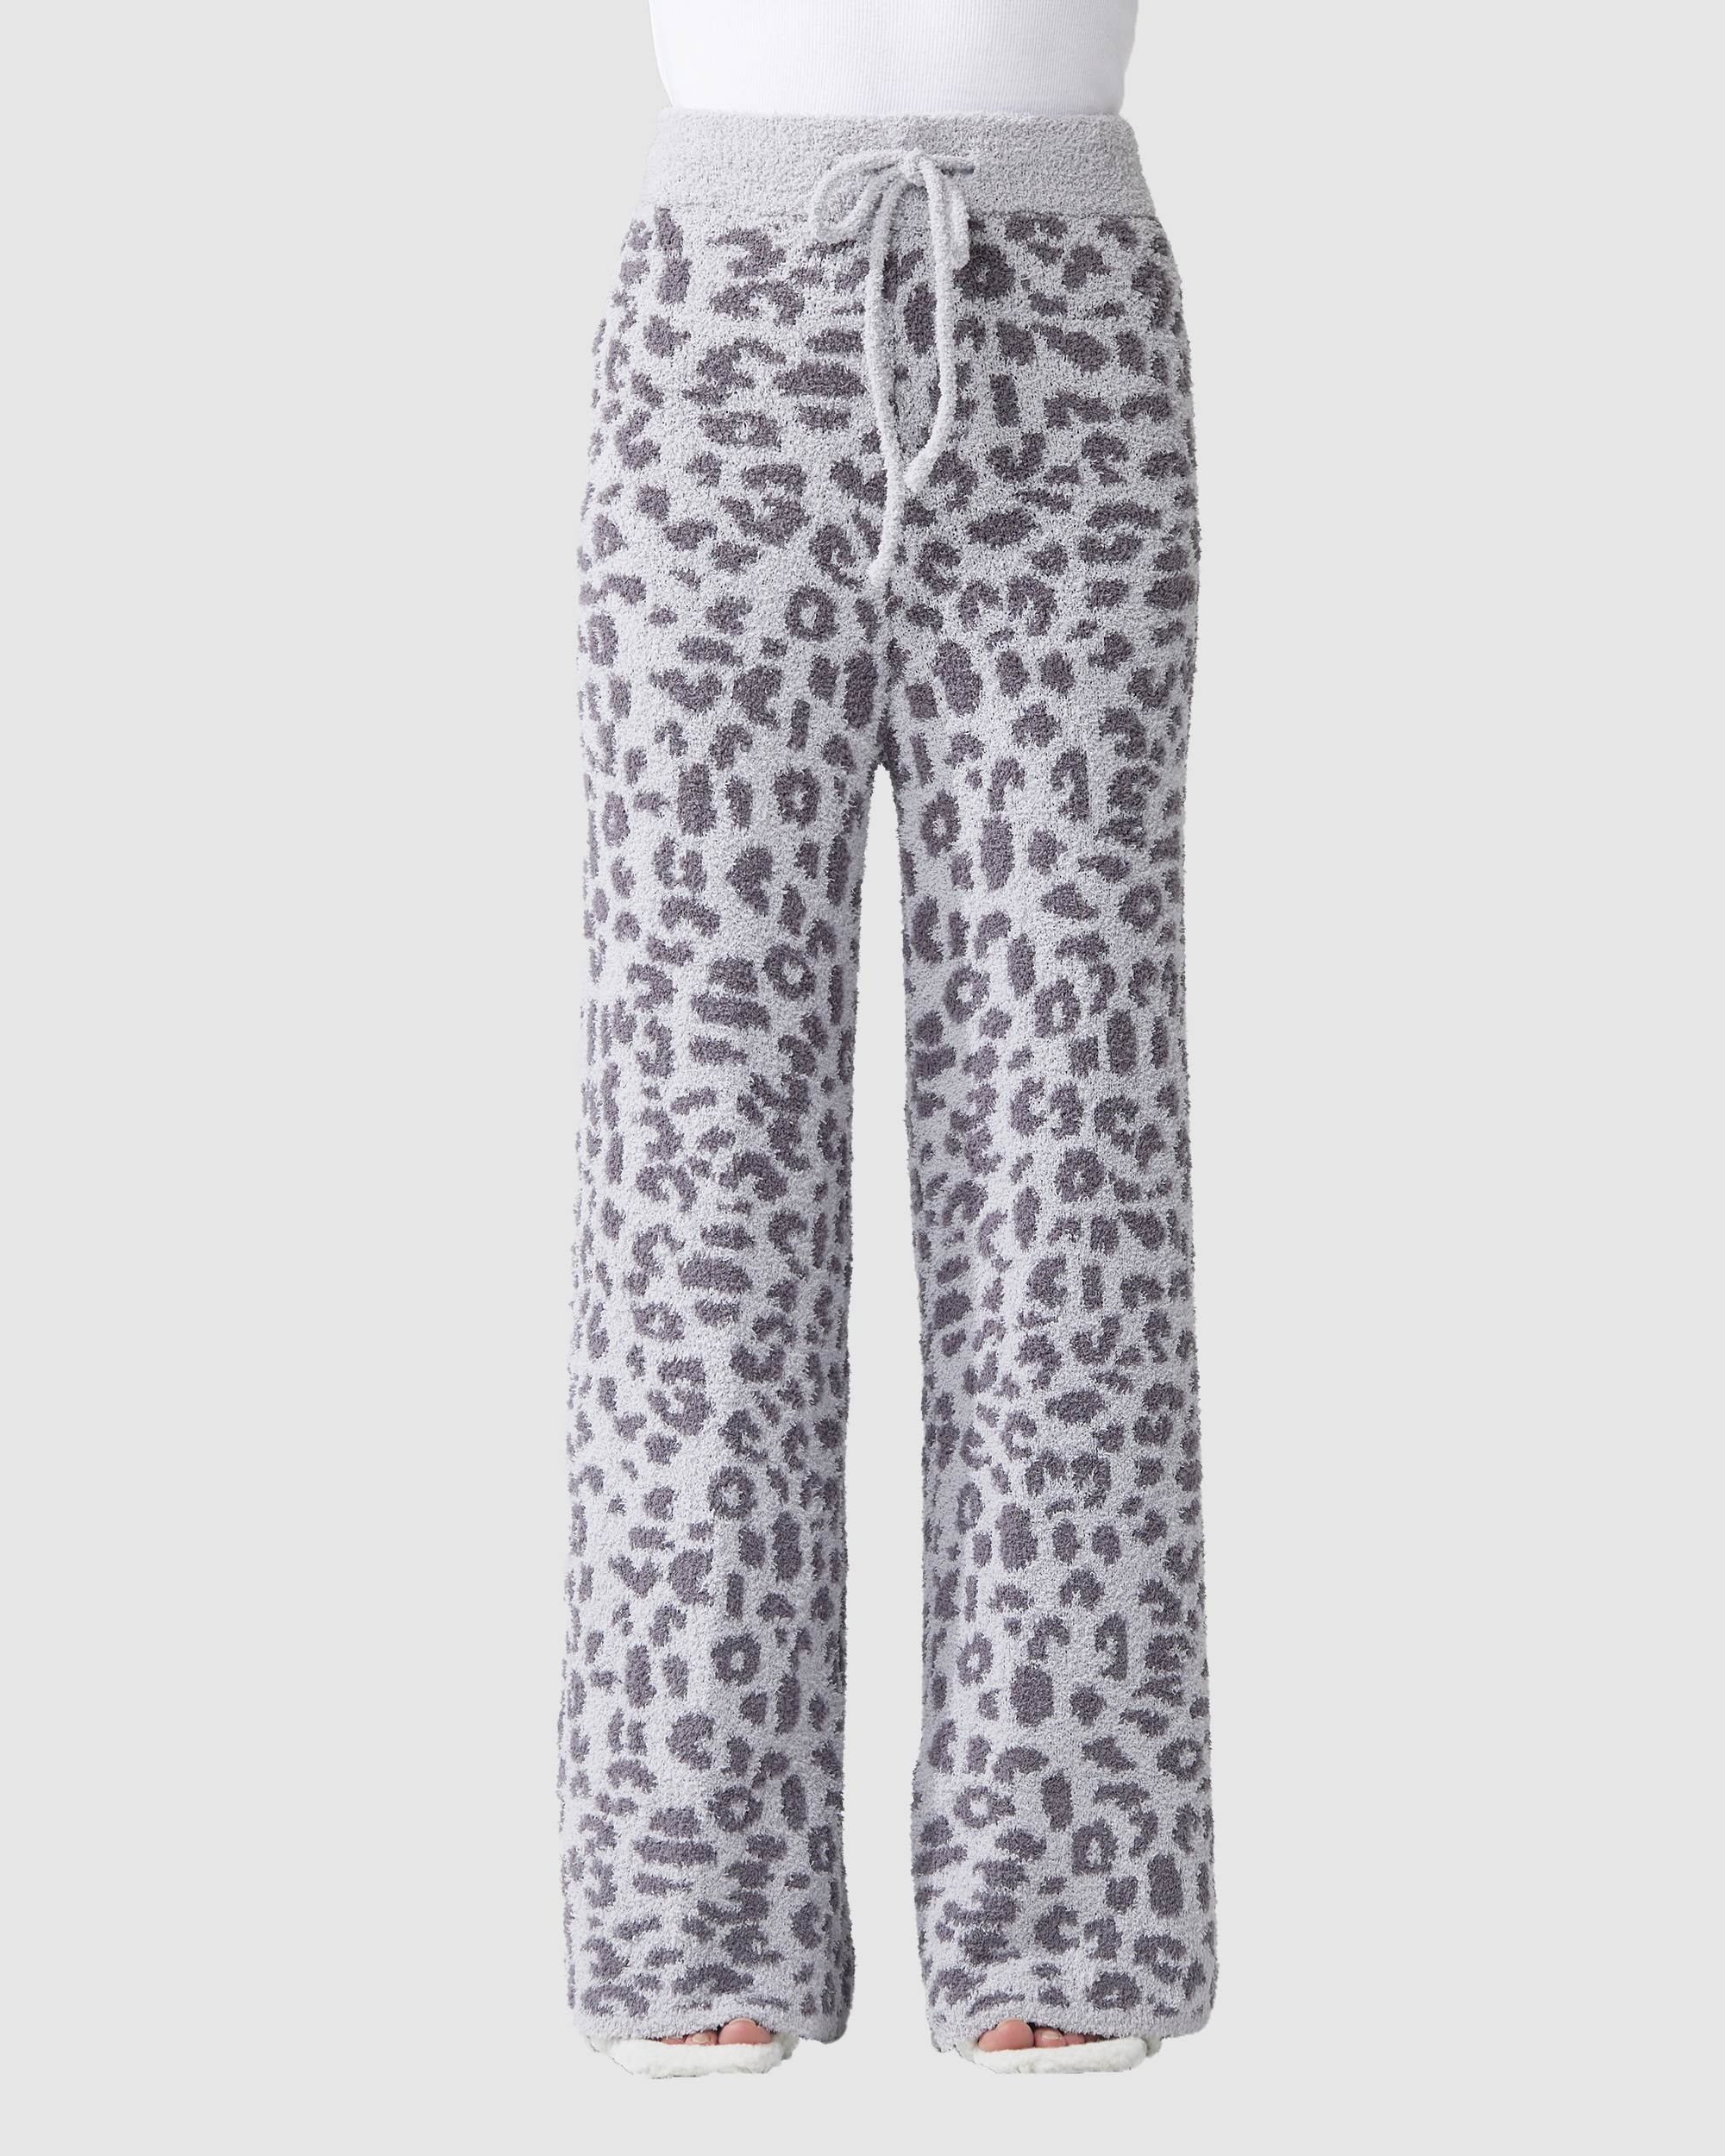 Soft Fuzzy Lounge Pants - Light Grey/Charcoal